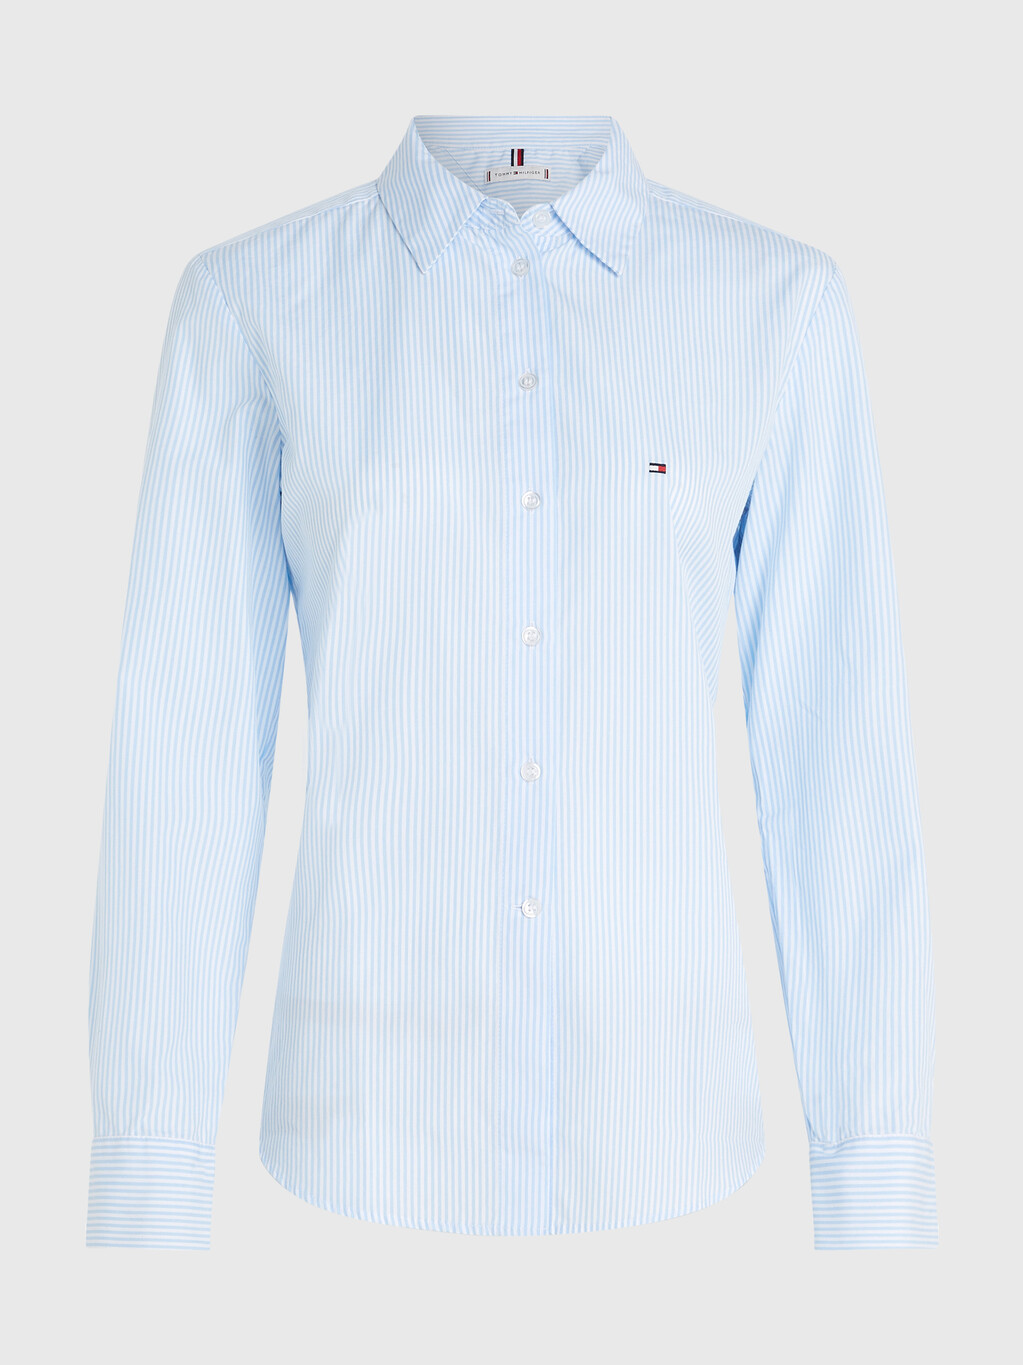 Ithaca Stripe Regular Fit Shirt, Ithaca Stp/ Blue, hi-res